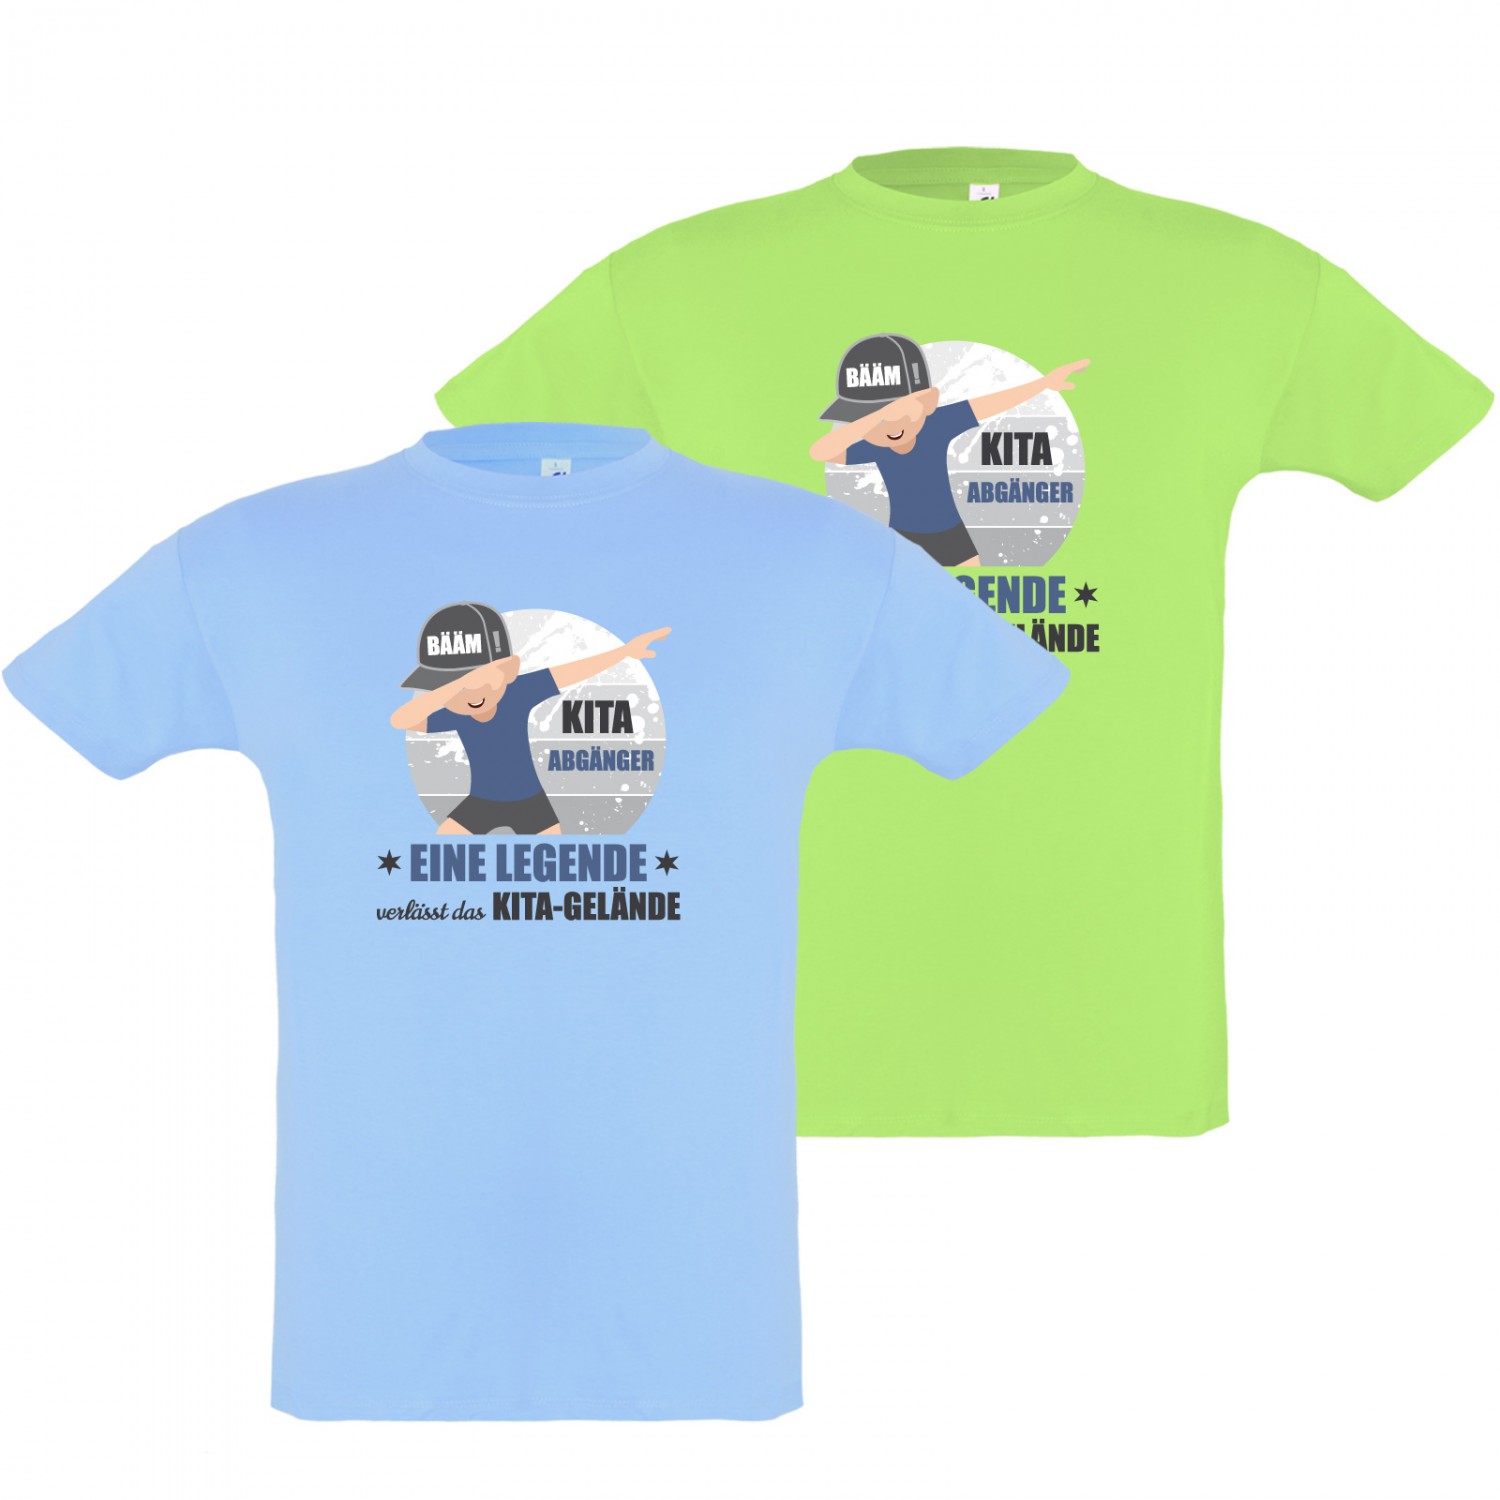 1. Foto T-Shirt Kita Jungs Abgänger Legende Shirt Kindegarten (Farbe: skyblau Größe: 130/140)